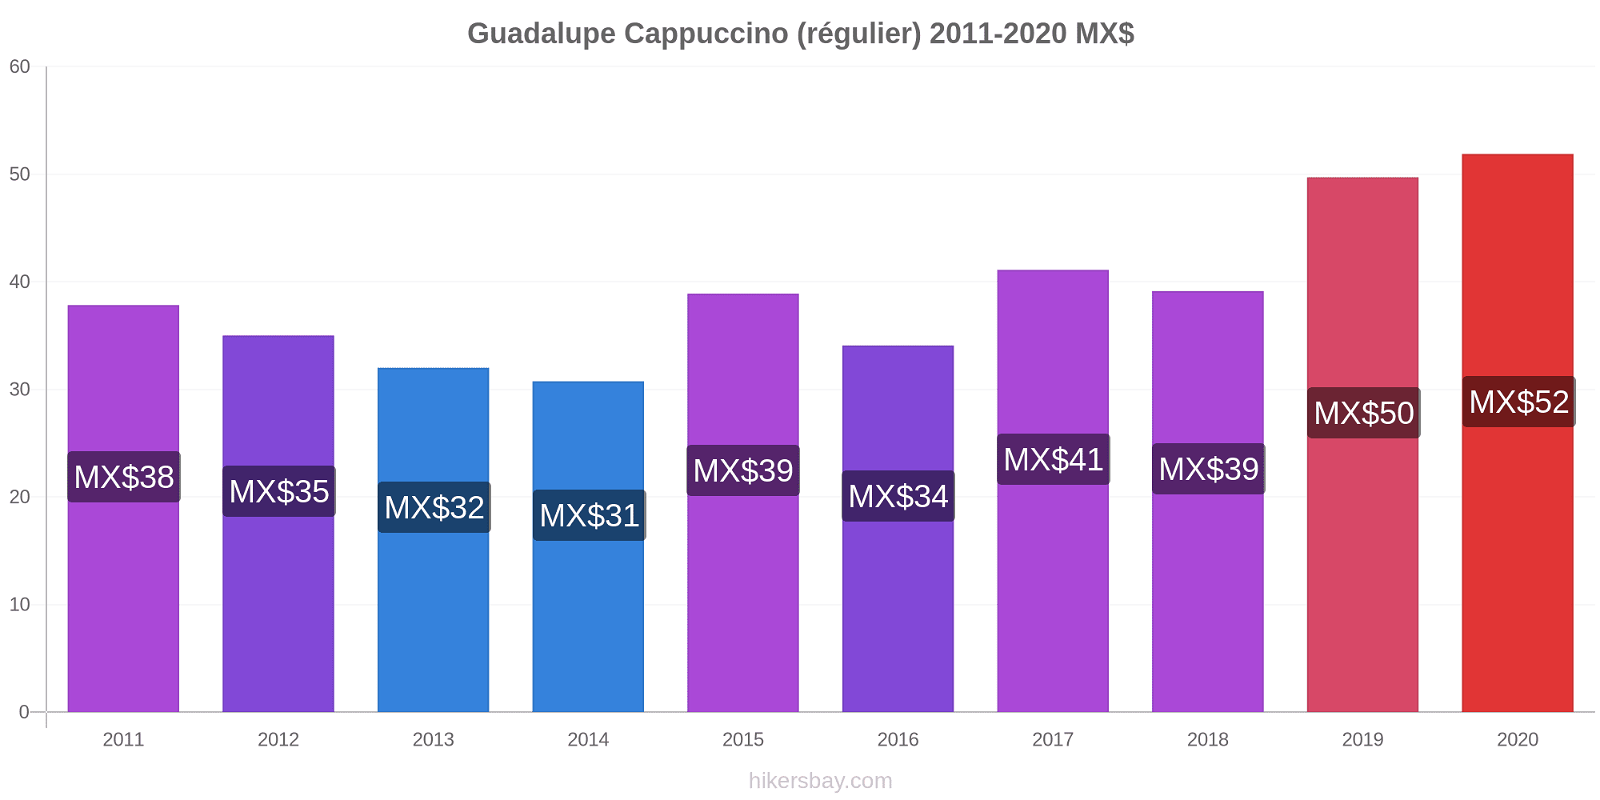 Guadalupe changements de prix Cappuccino (régulier) hikersbay.com